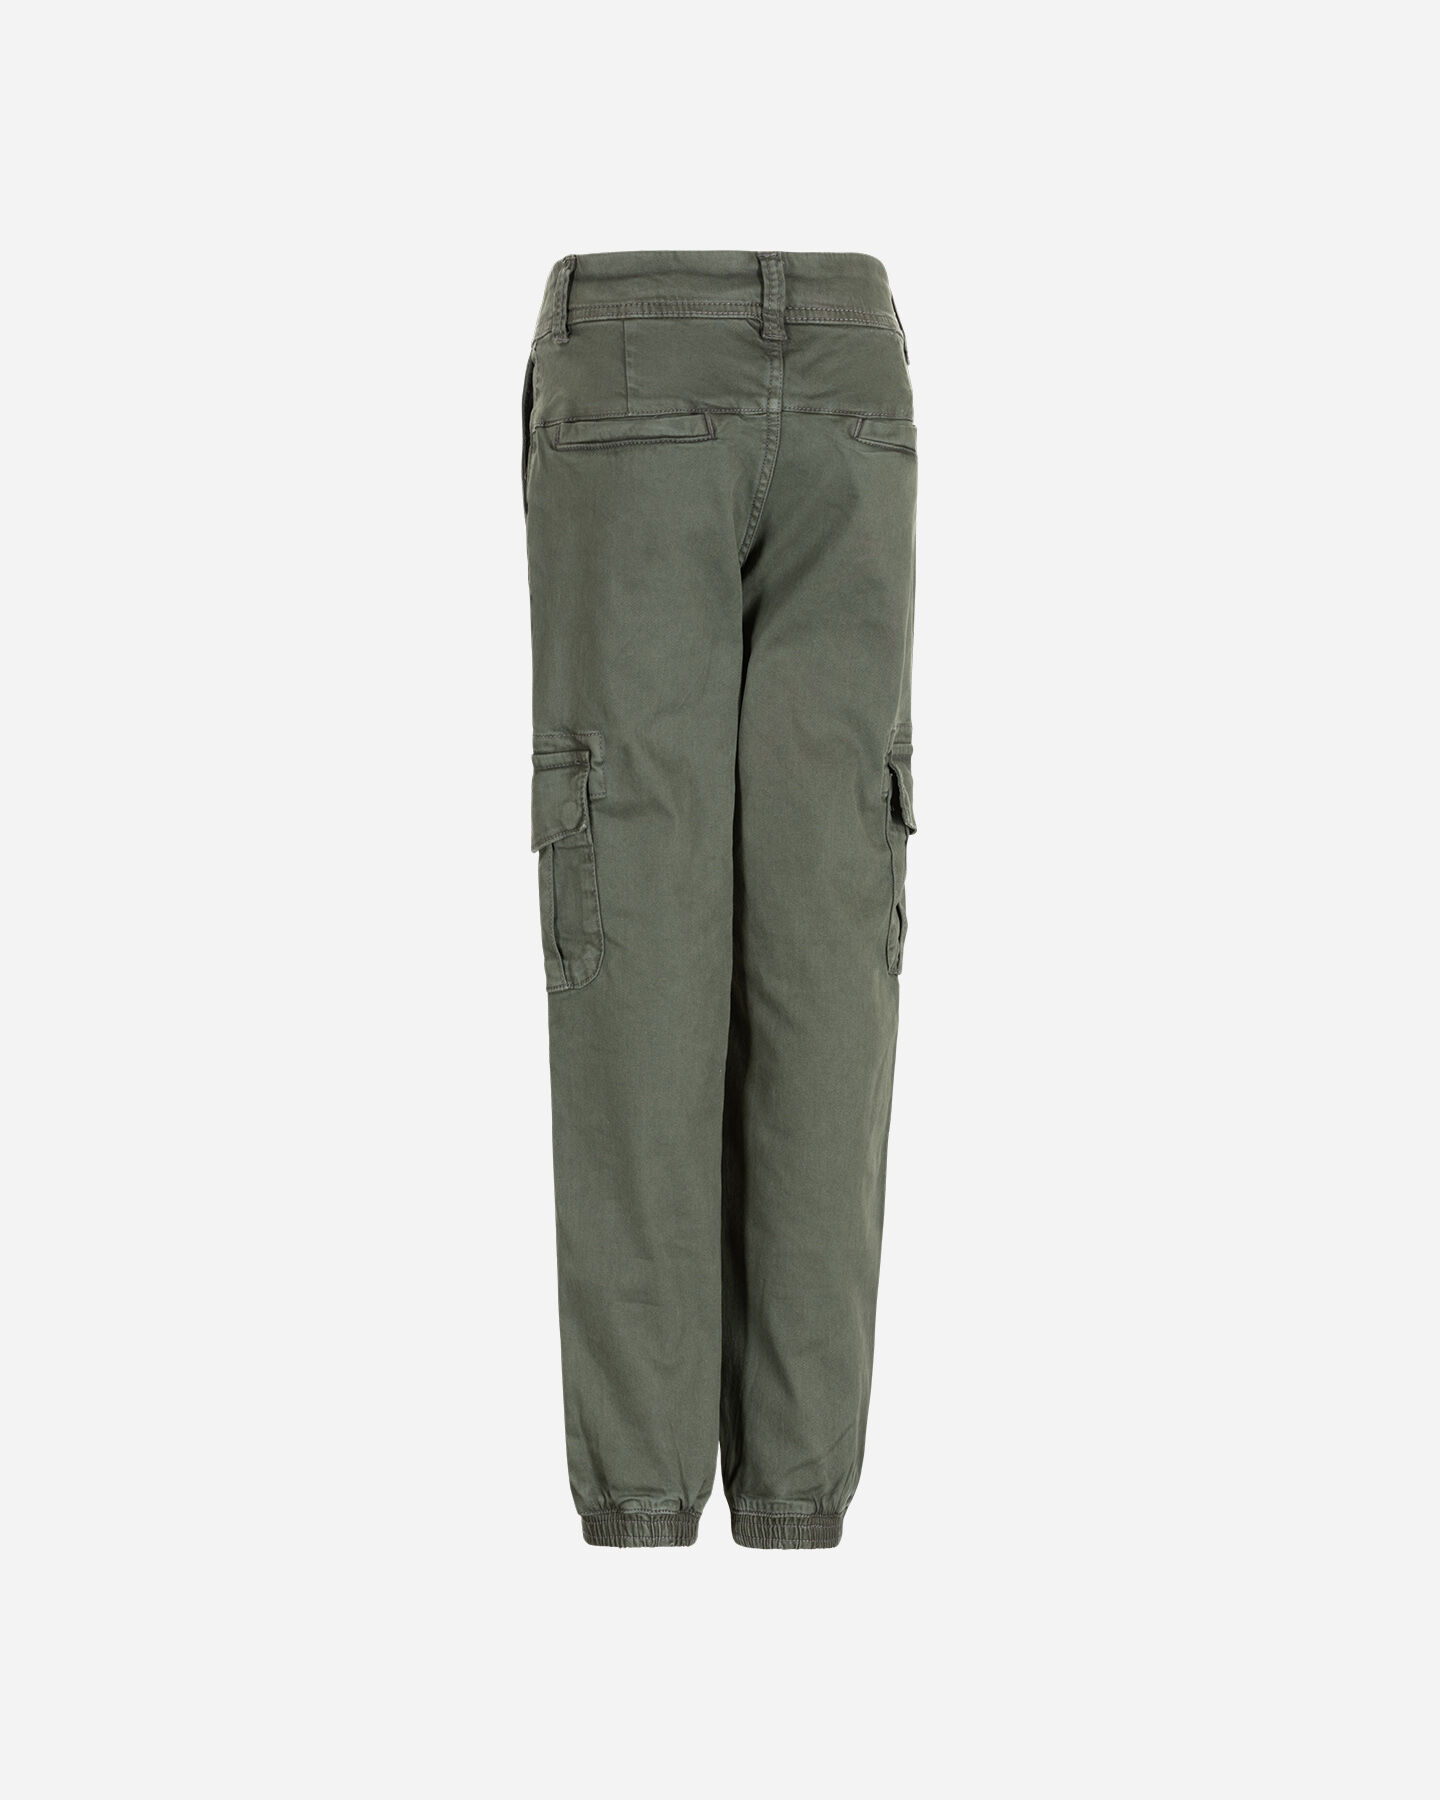  Pantalone BEAR SEASONAL JR S4108756|854|8 scatto 1